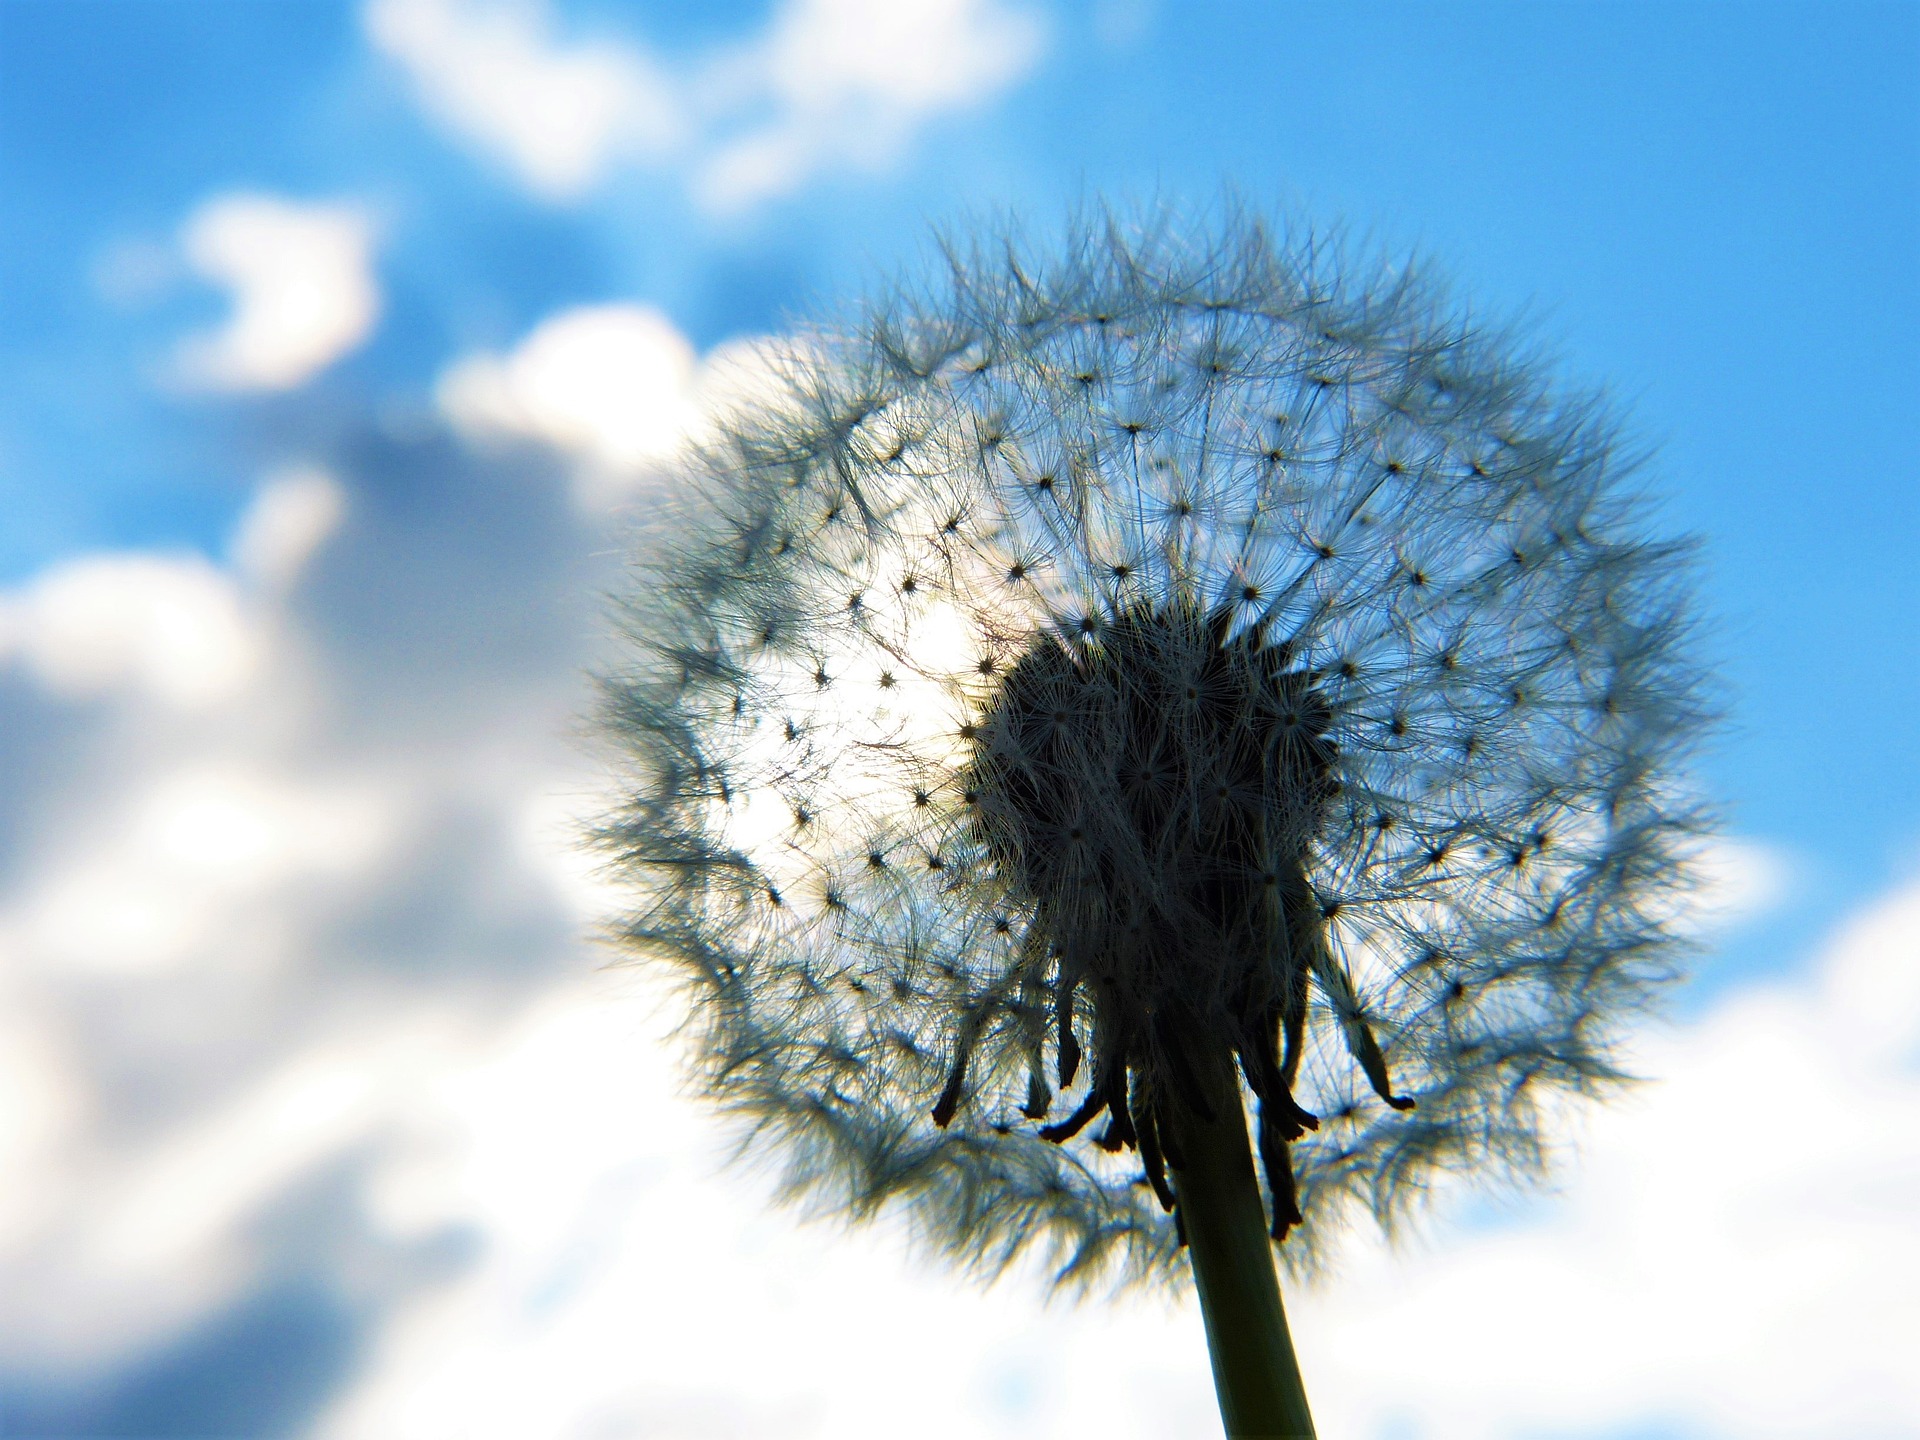 dandelion against a blue sky backdrop